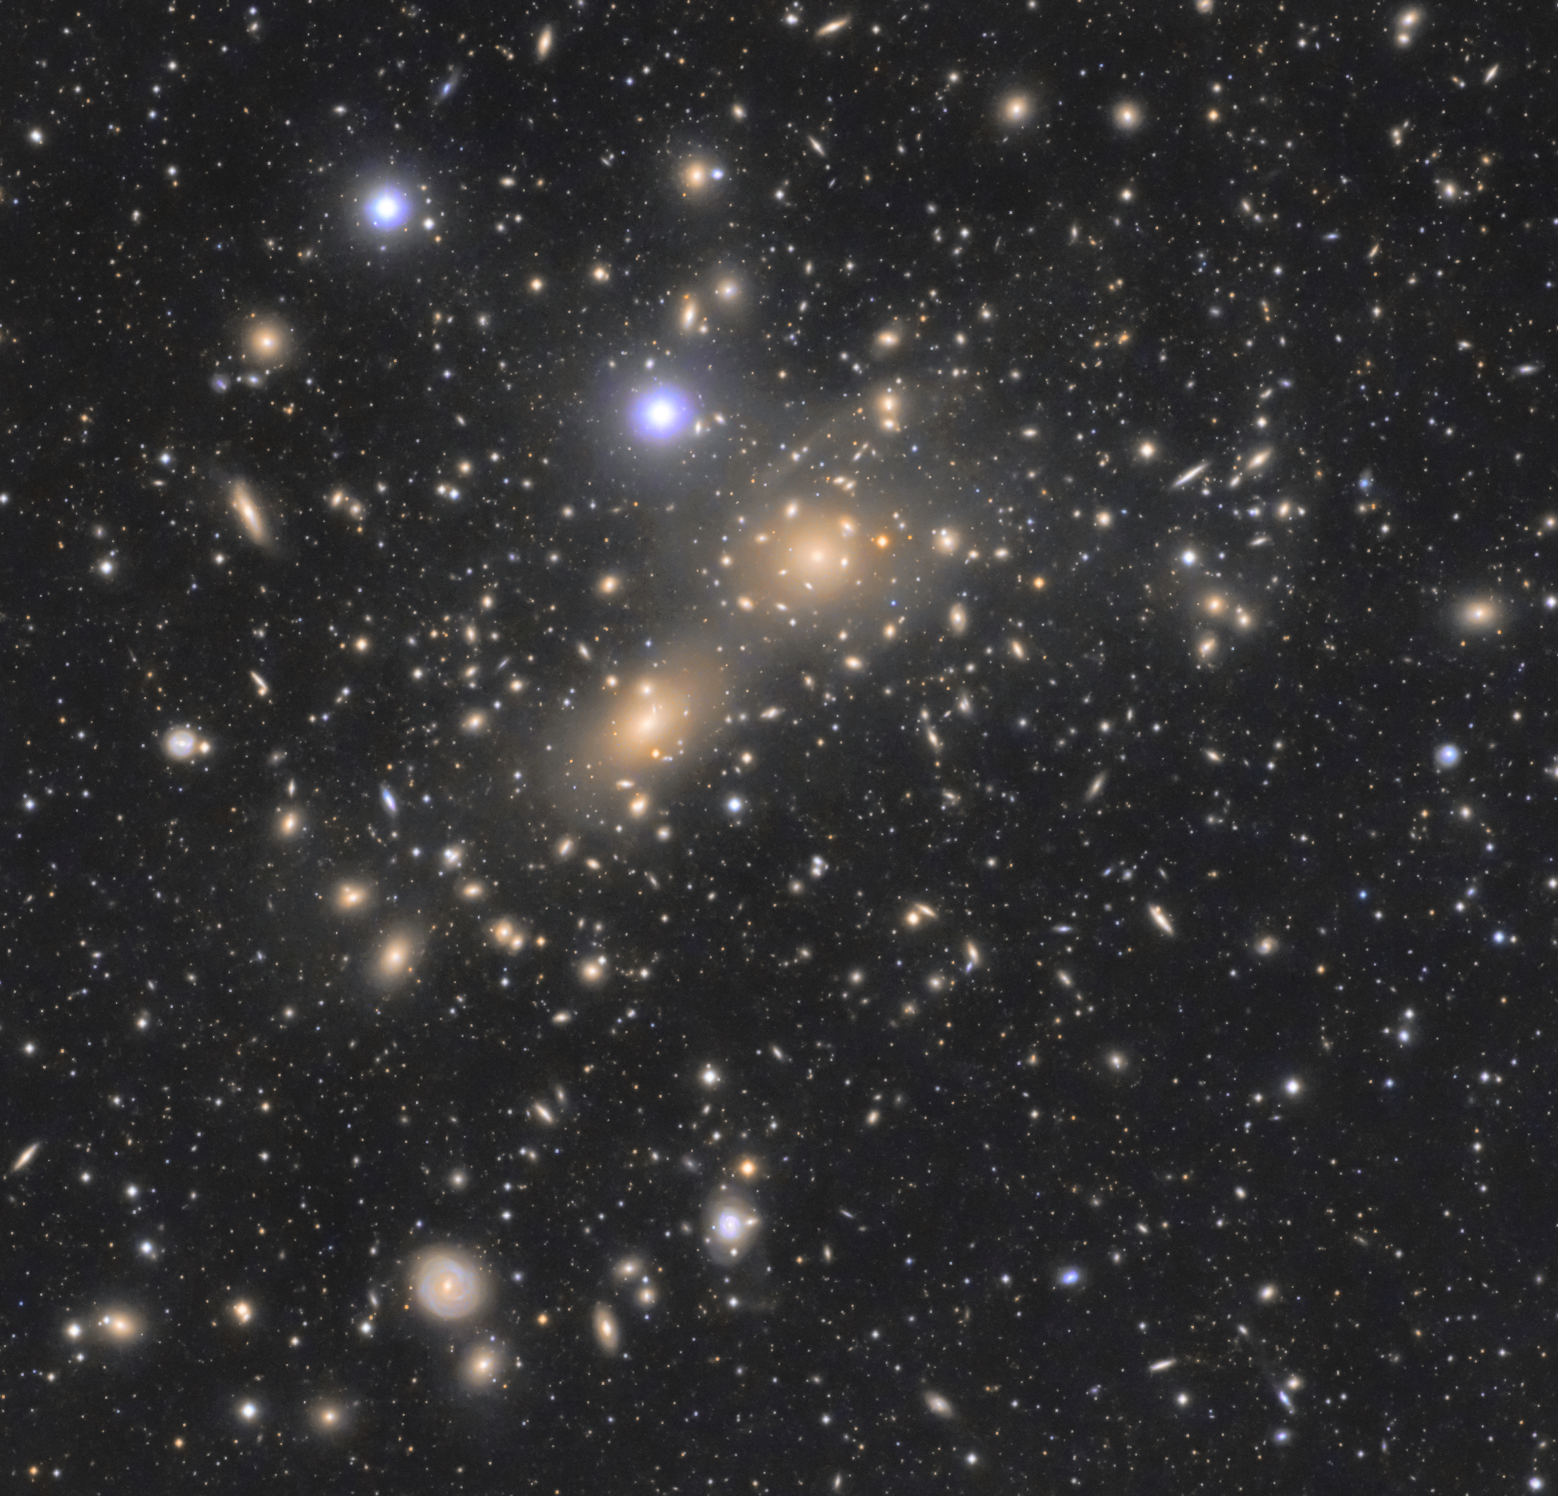 L’Ammasso di galassie della Chioma di Berenice Credit: Joe Hua https://www.astrobin.com/vw7kj8/